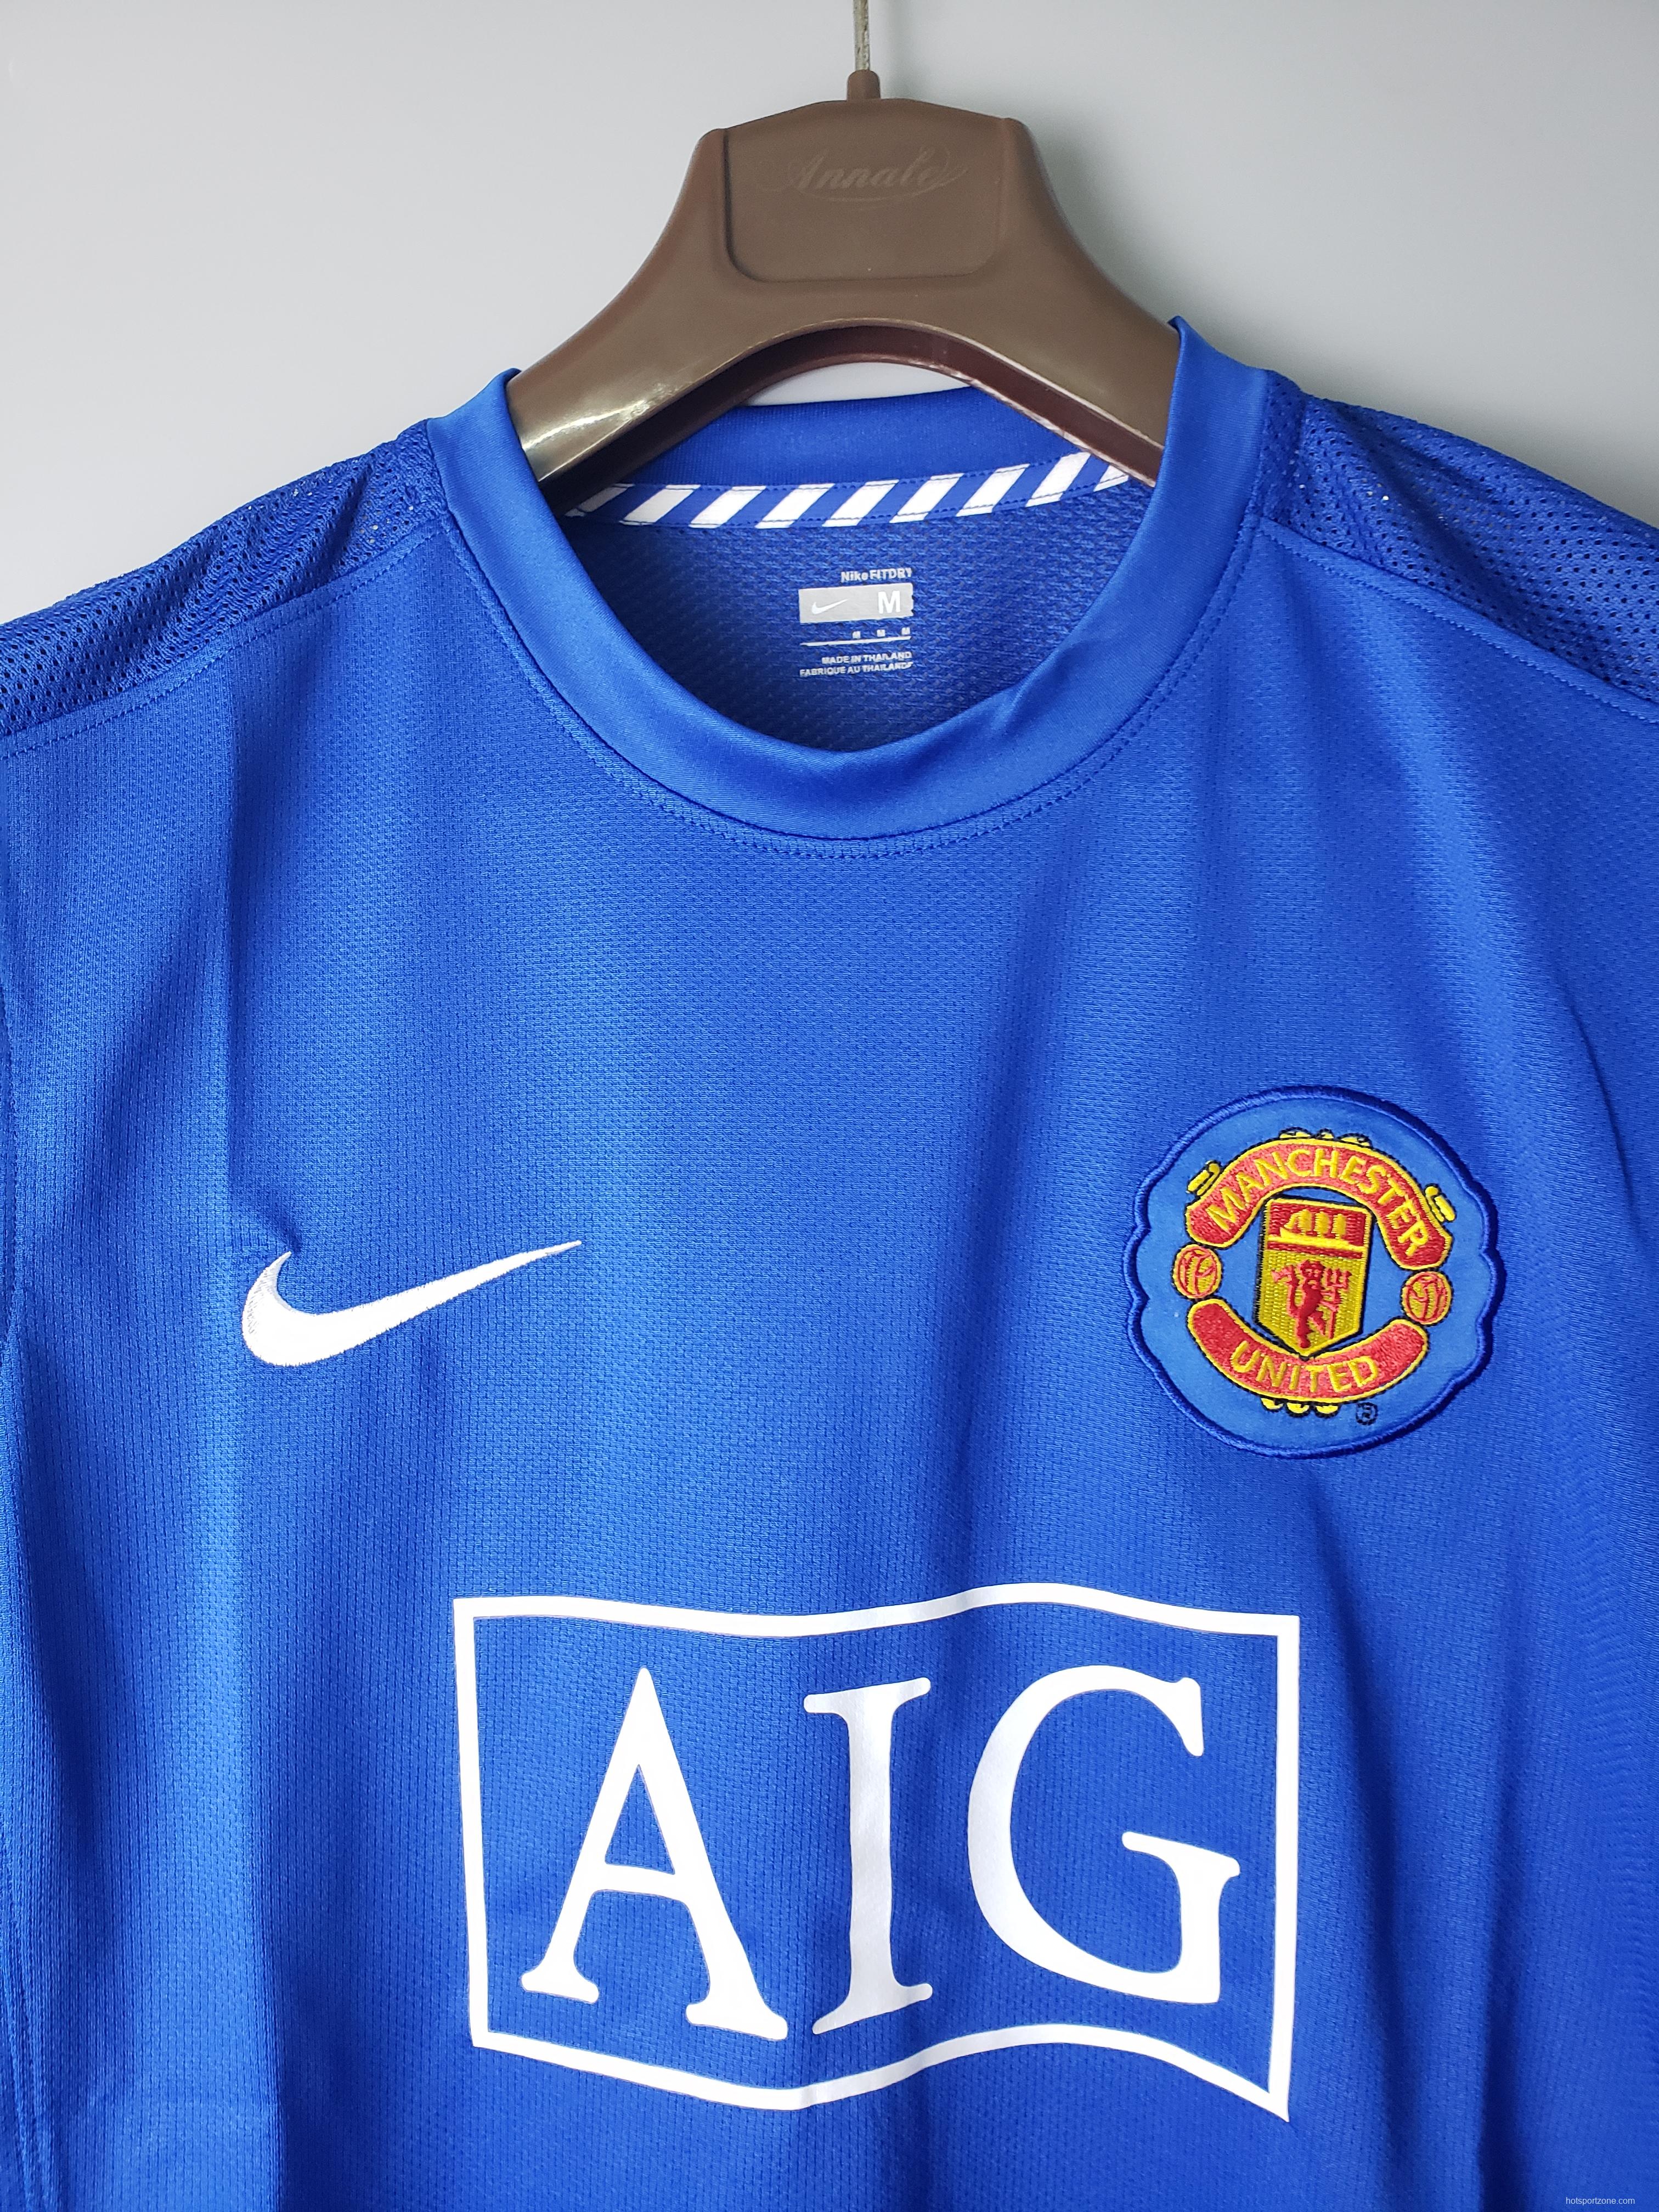 Retro 08/09 Manchester United Third short sleeve Soccer Jersey